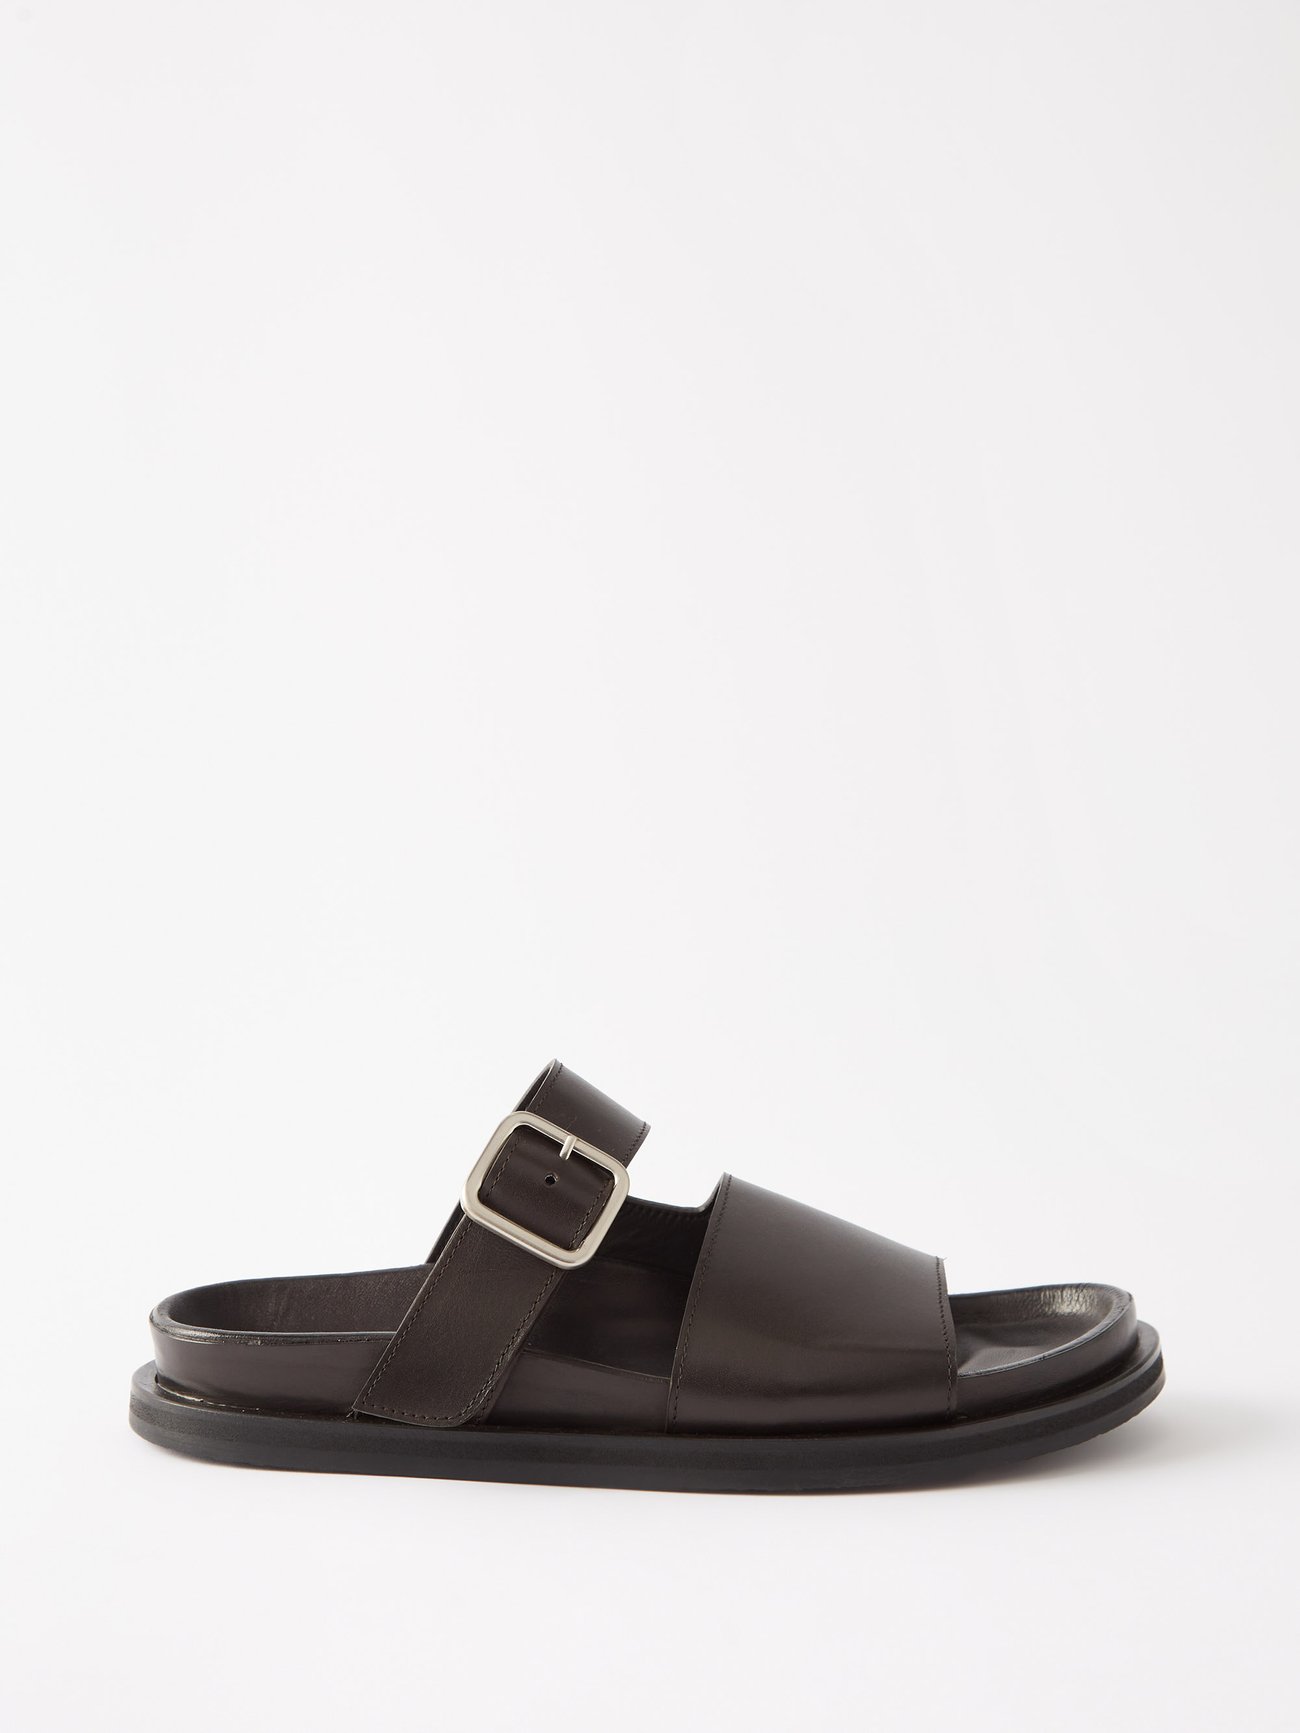 Brown Buckle-strap split leather sandals | Studio Nicholson ...